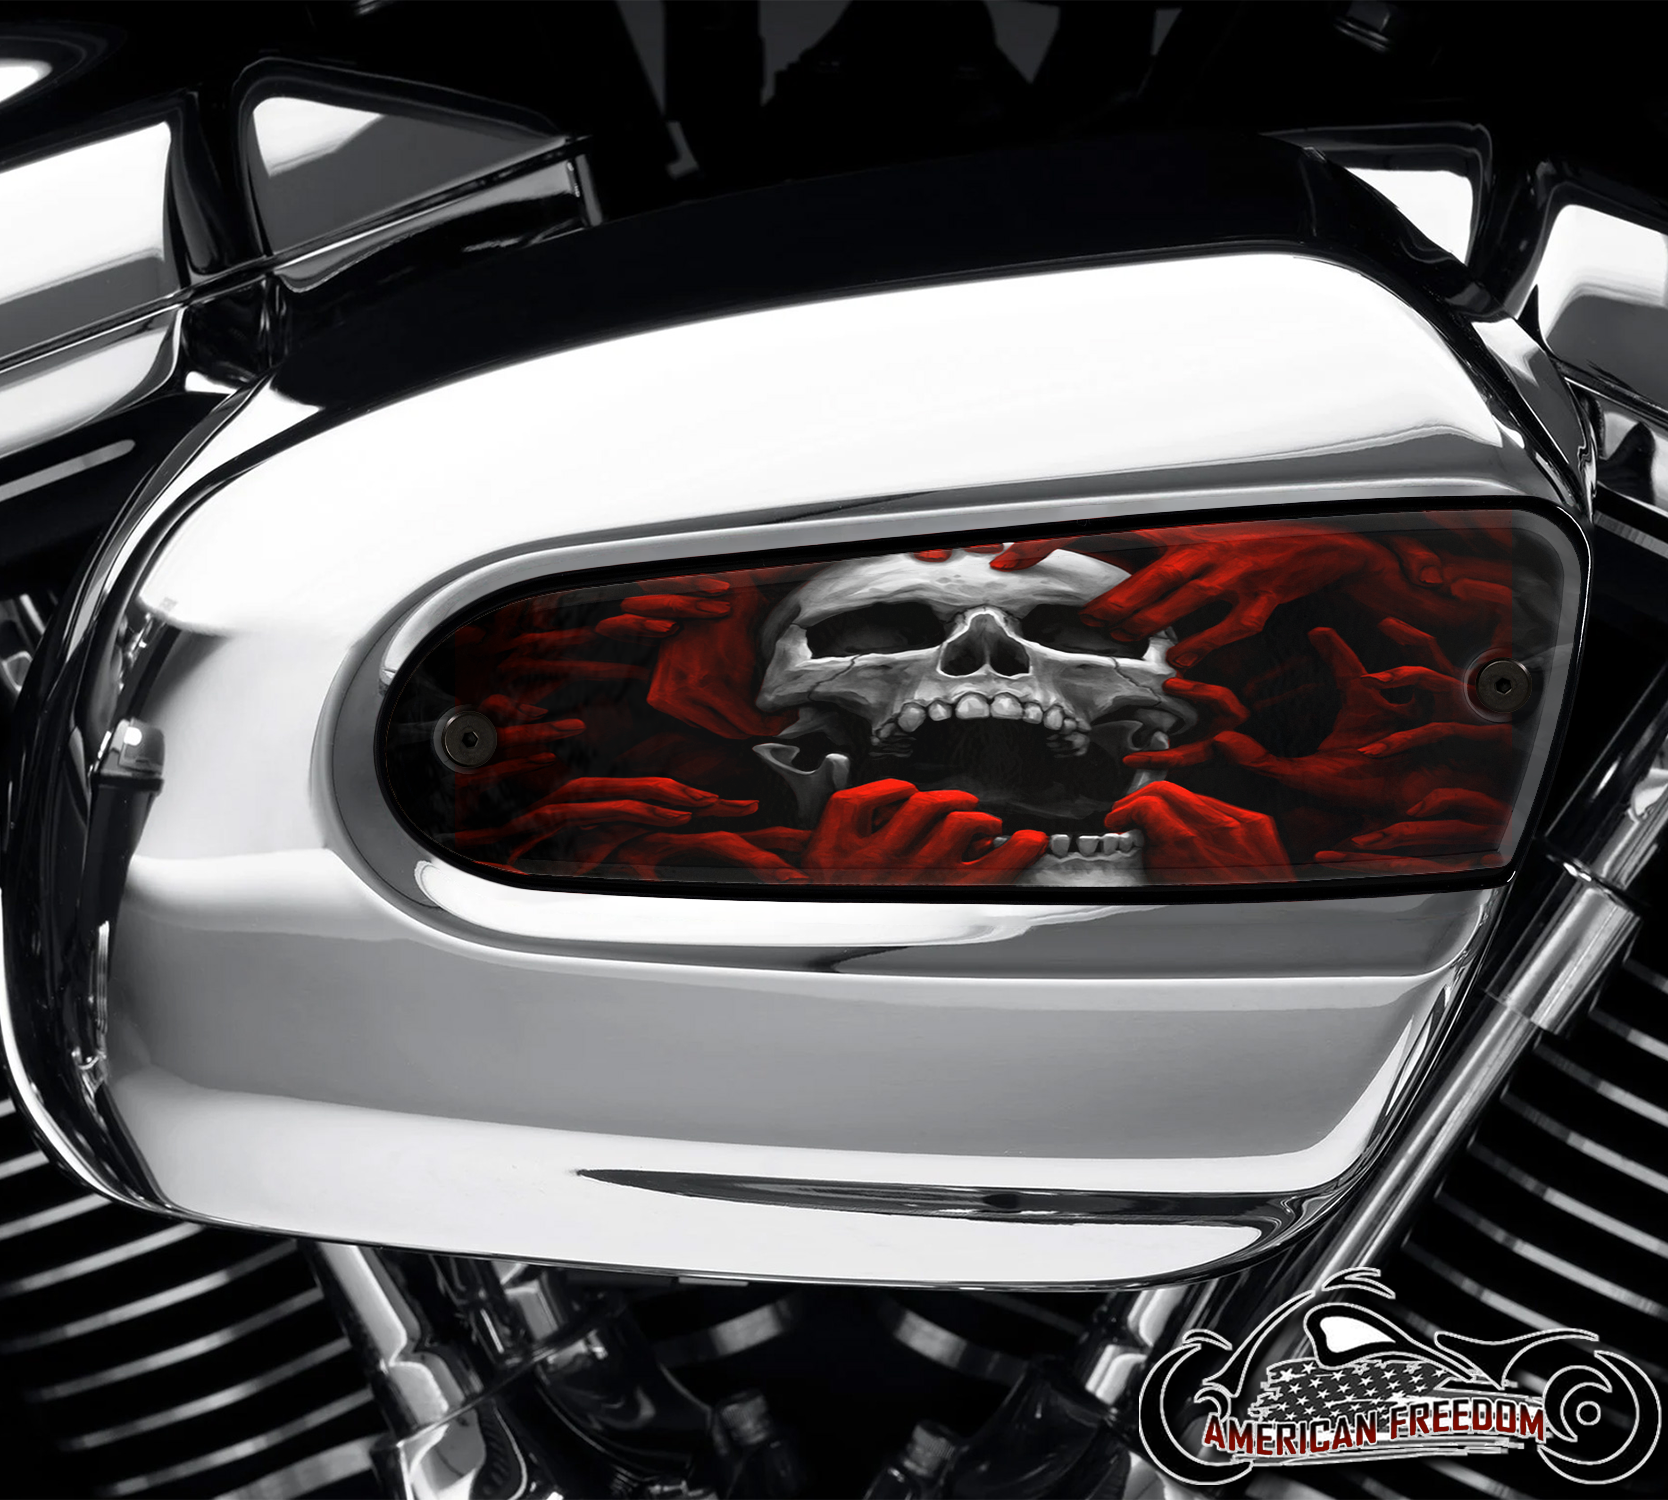 Harley Davidson Wedge Air Cleaner Insert - Torn Apart Skull Red